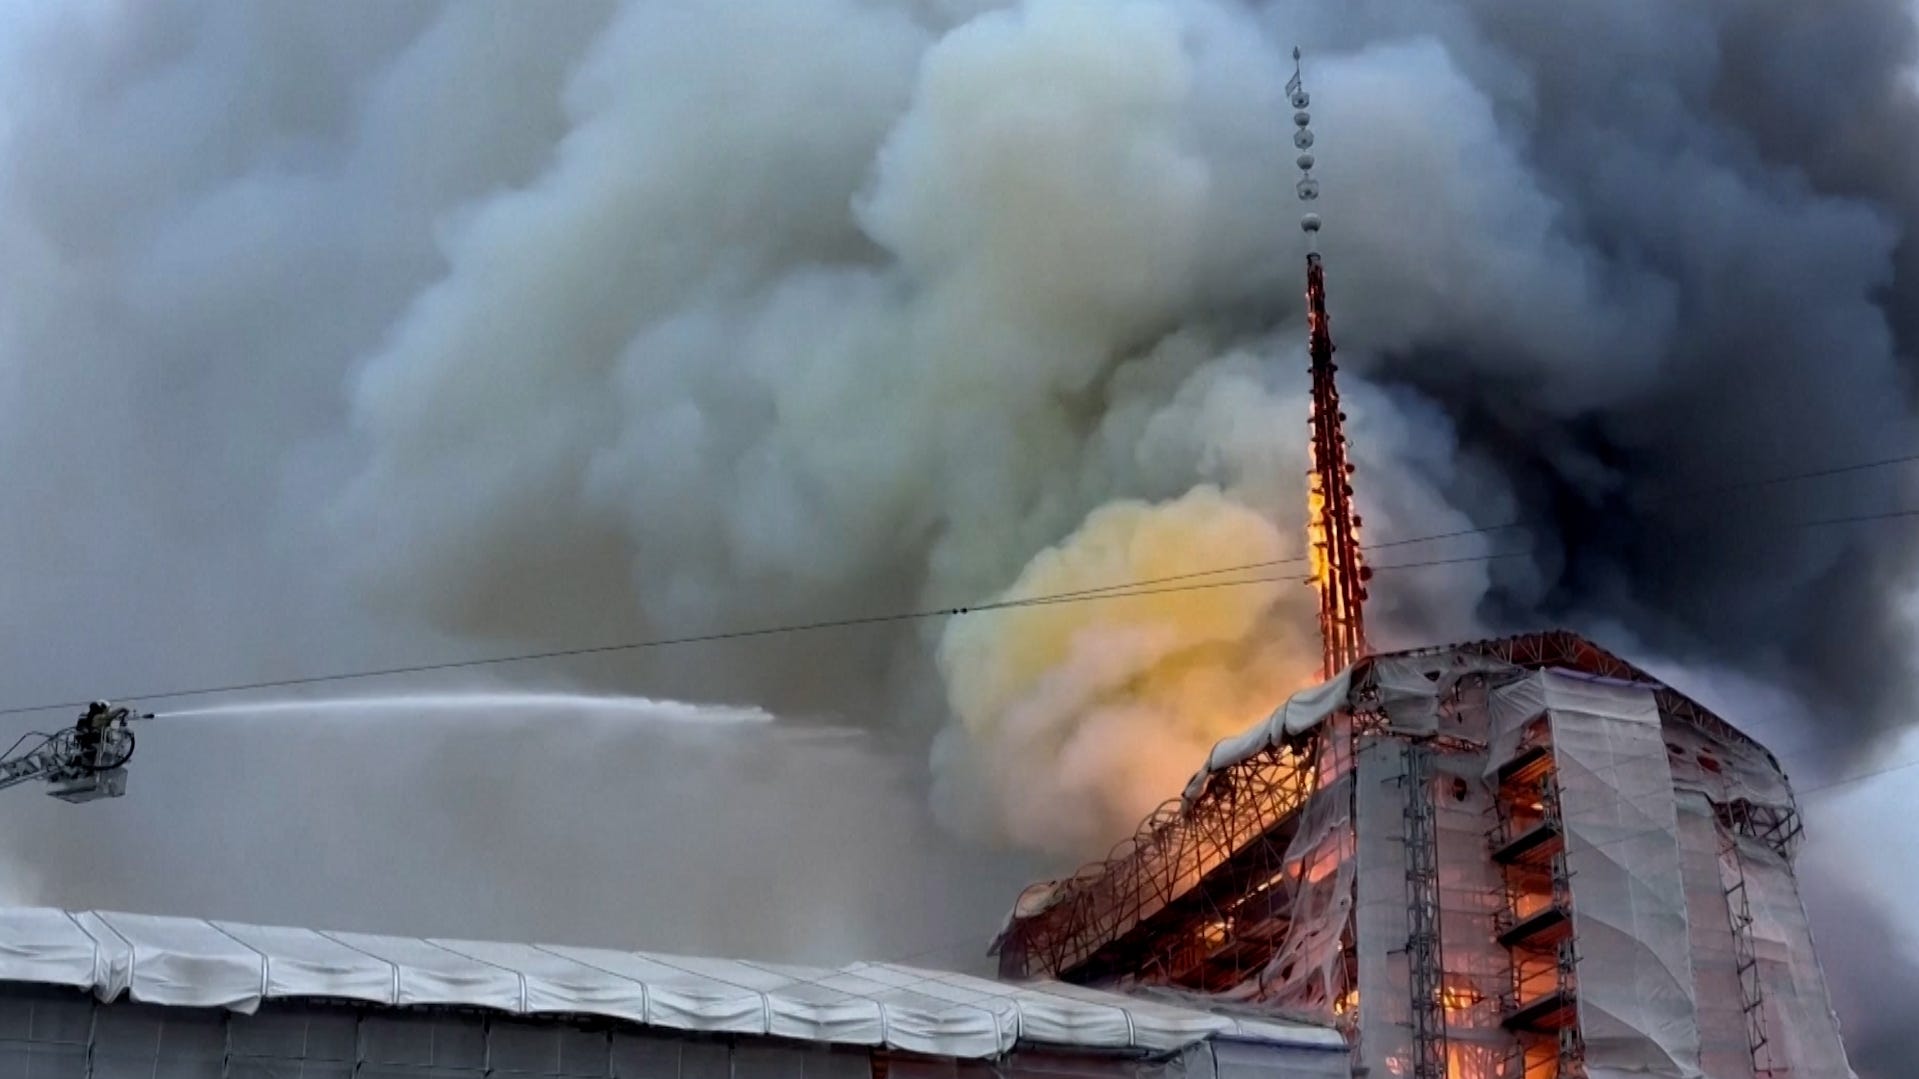 Copenhagen blaze engulfs, collapses historic spire